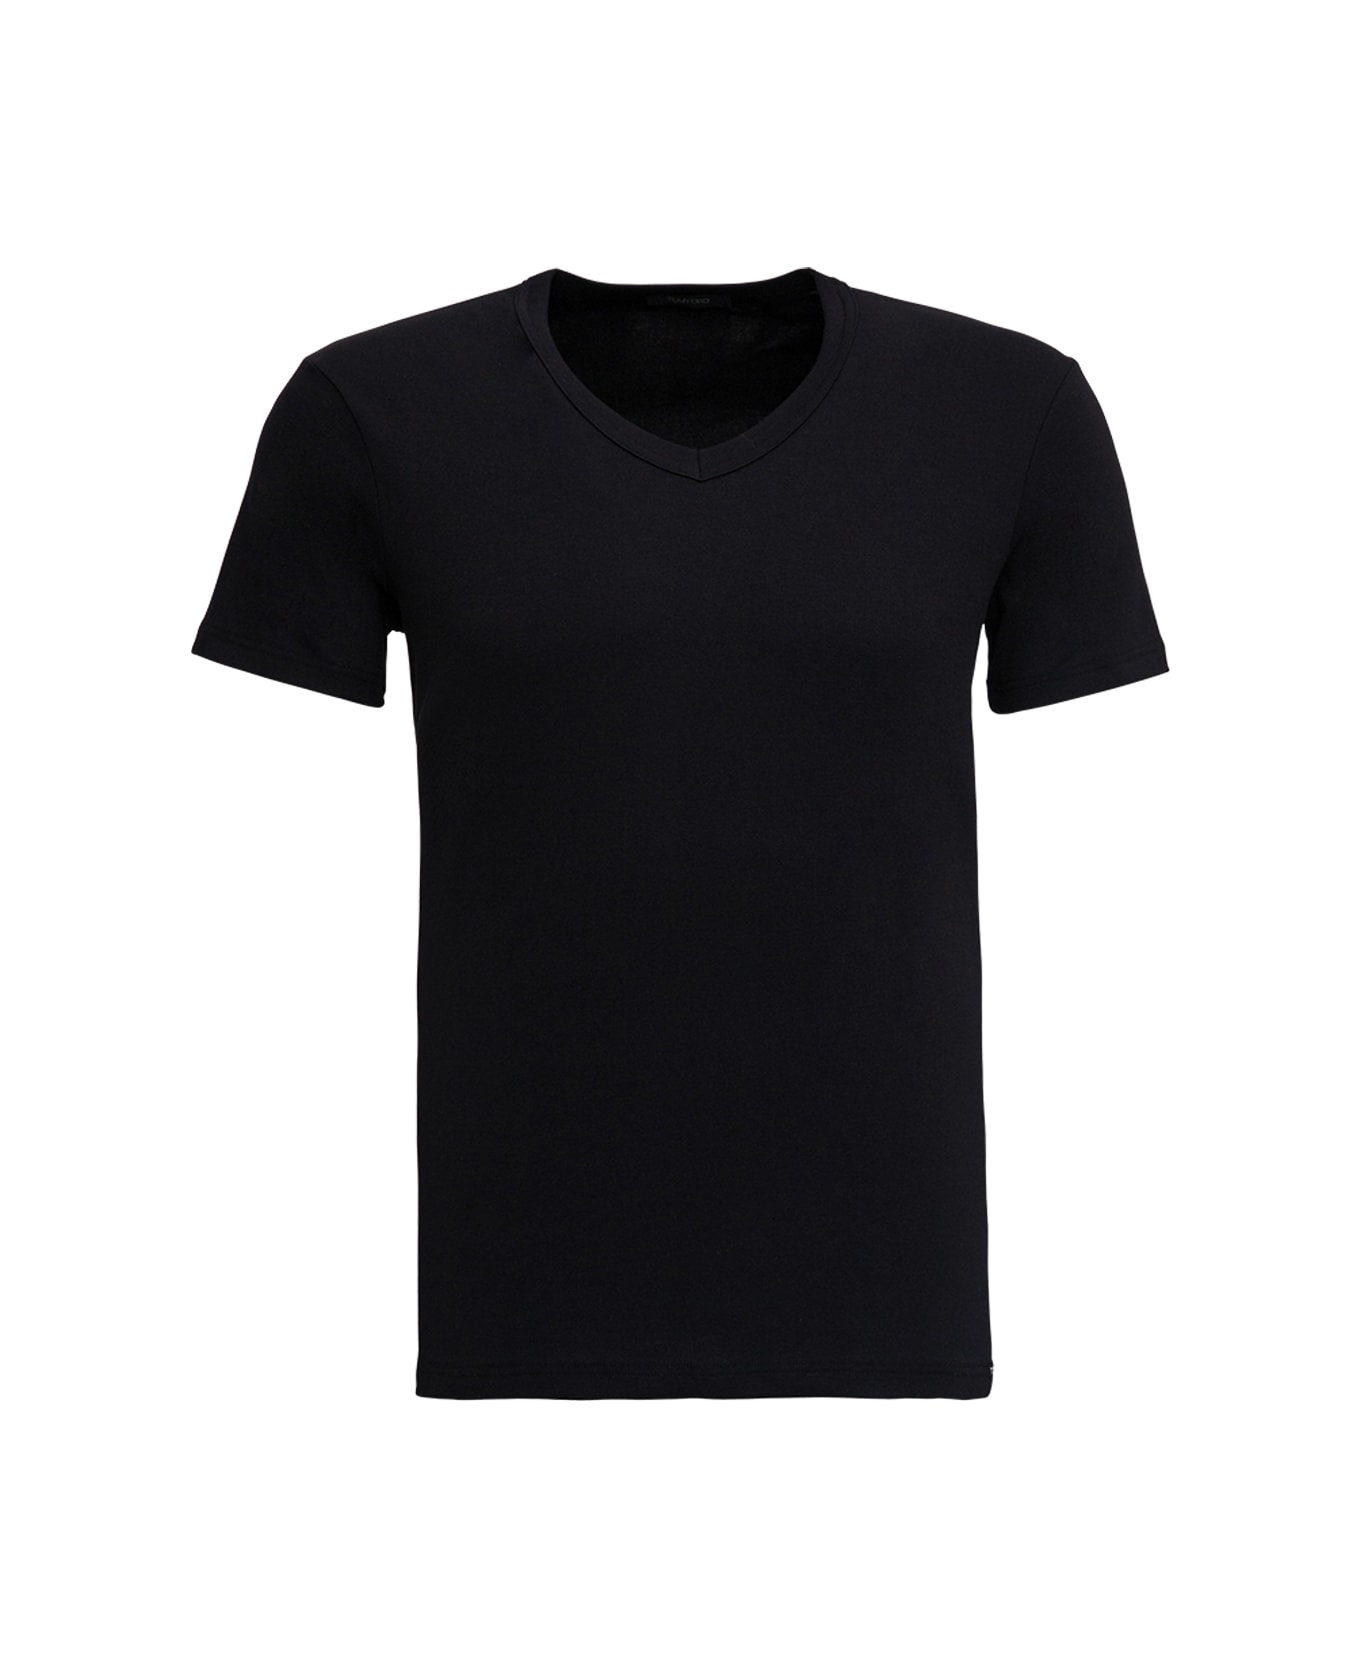 Tom Ford Man's Black Stretch Cotton V-neck Tshirt - Black